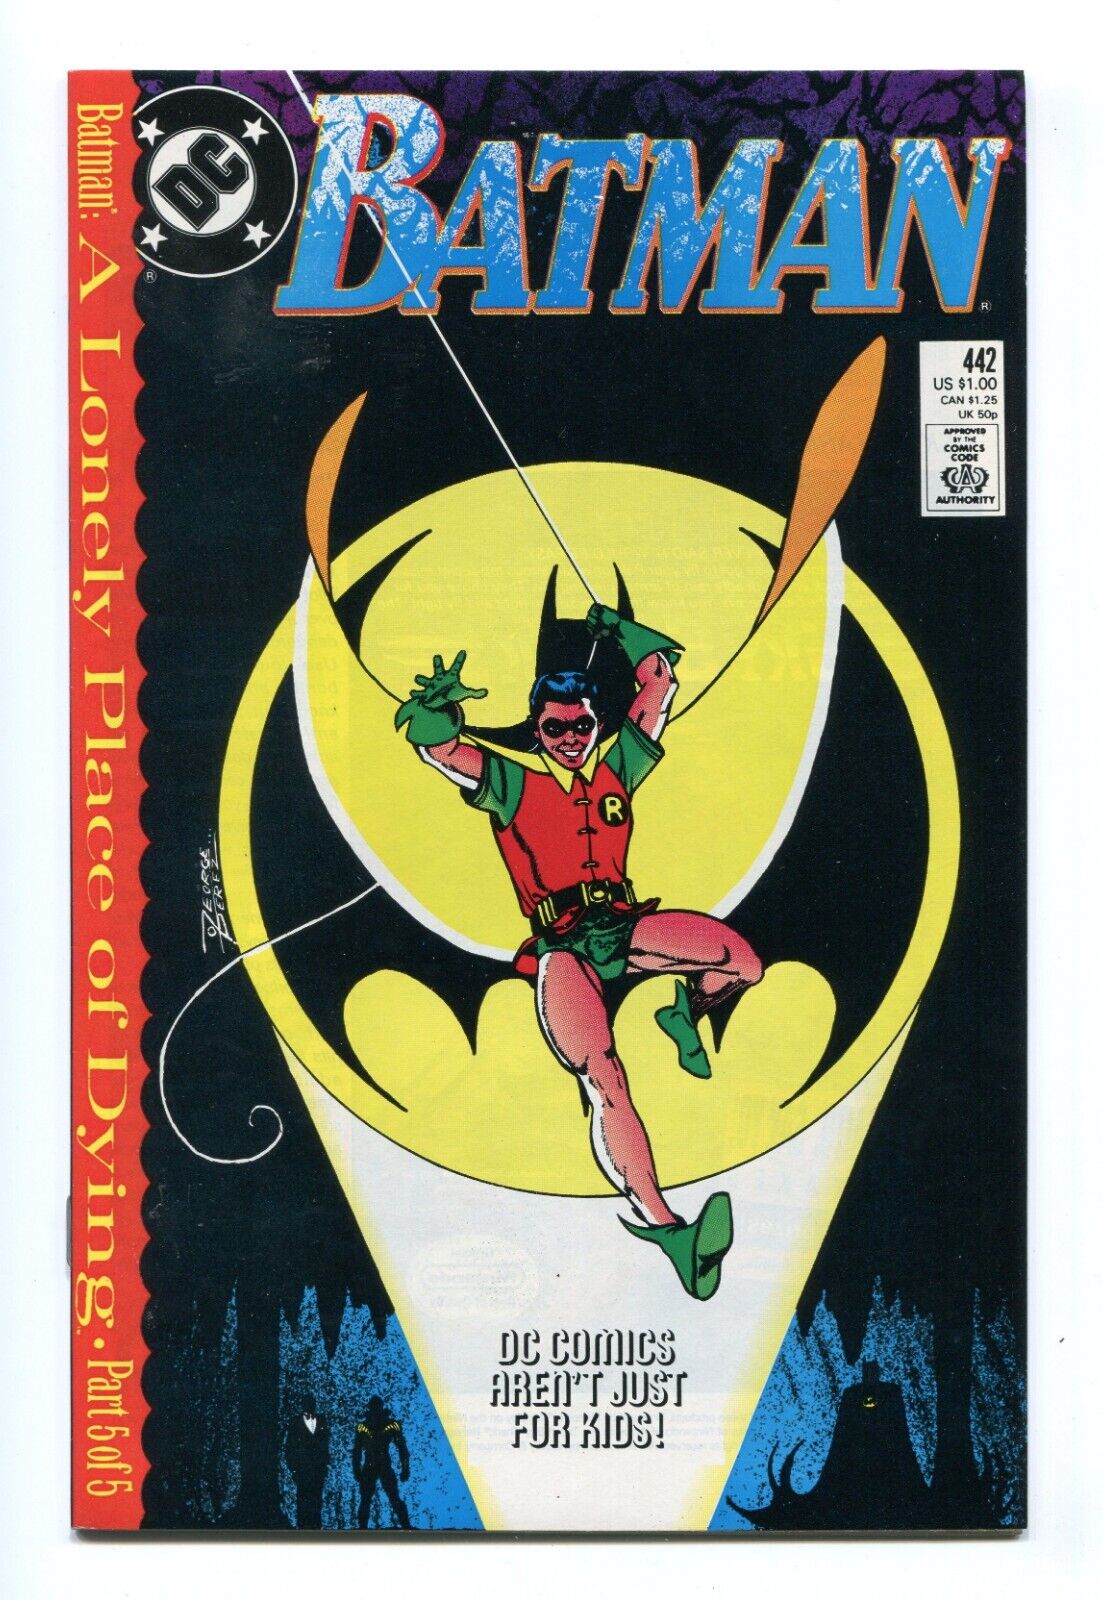 BATMAN #442 - TIM DRAKE'S 1ST APPEARANCE AS ROBIN - UNREAD NM+ COPY - 1989